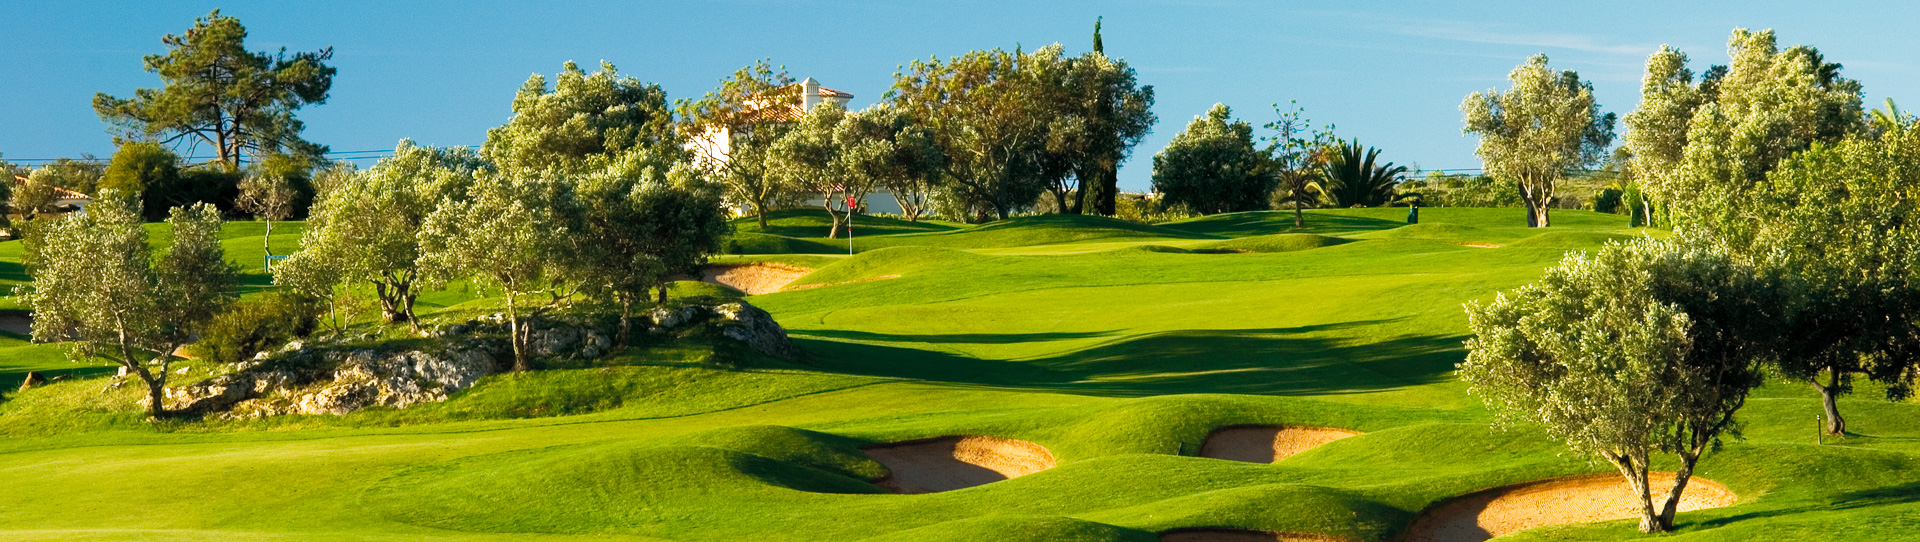 Portugal golf courses - Gramacho Golf Course - Photo 1